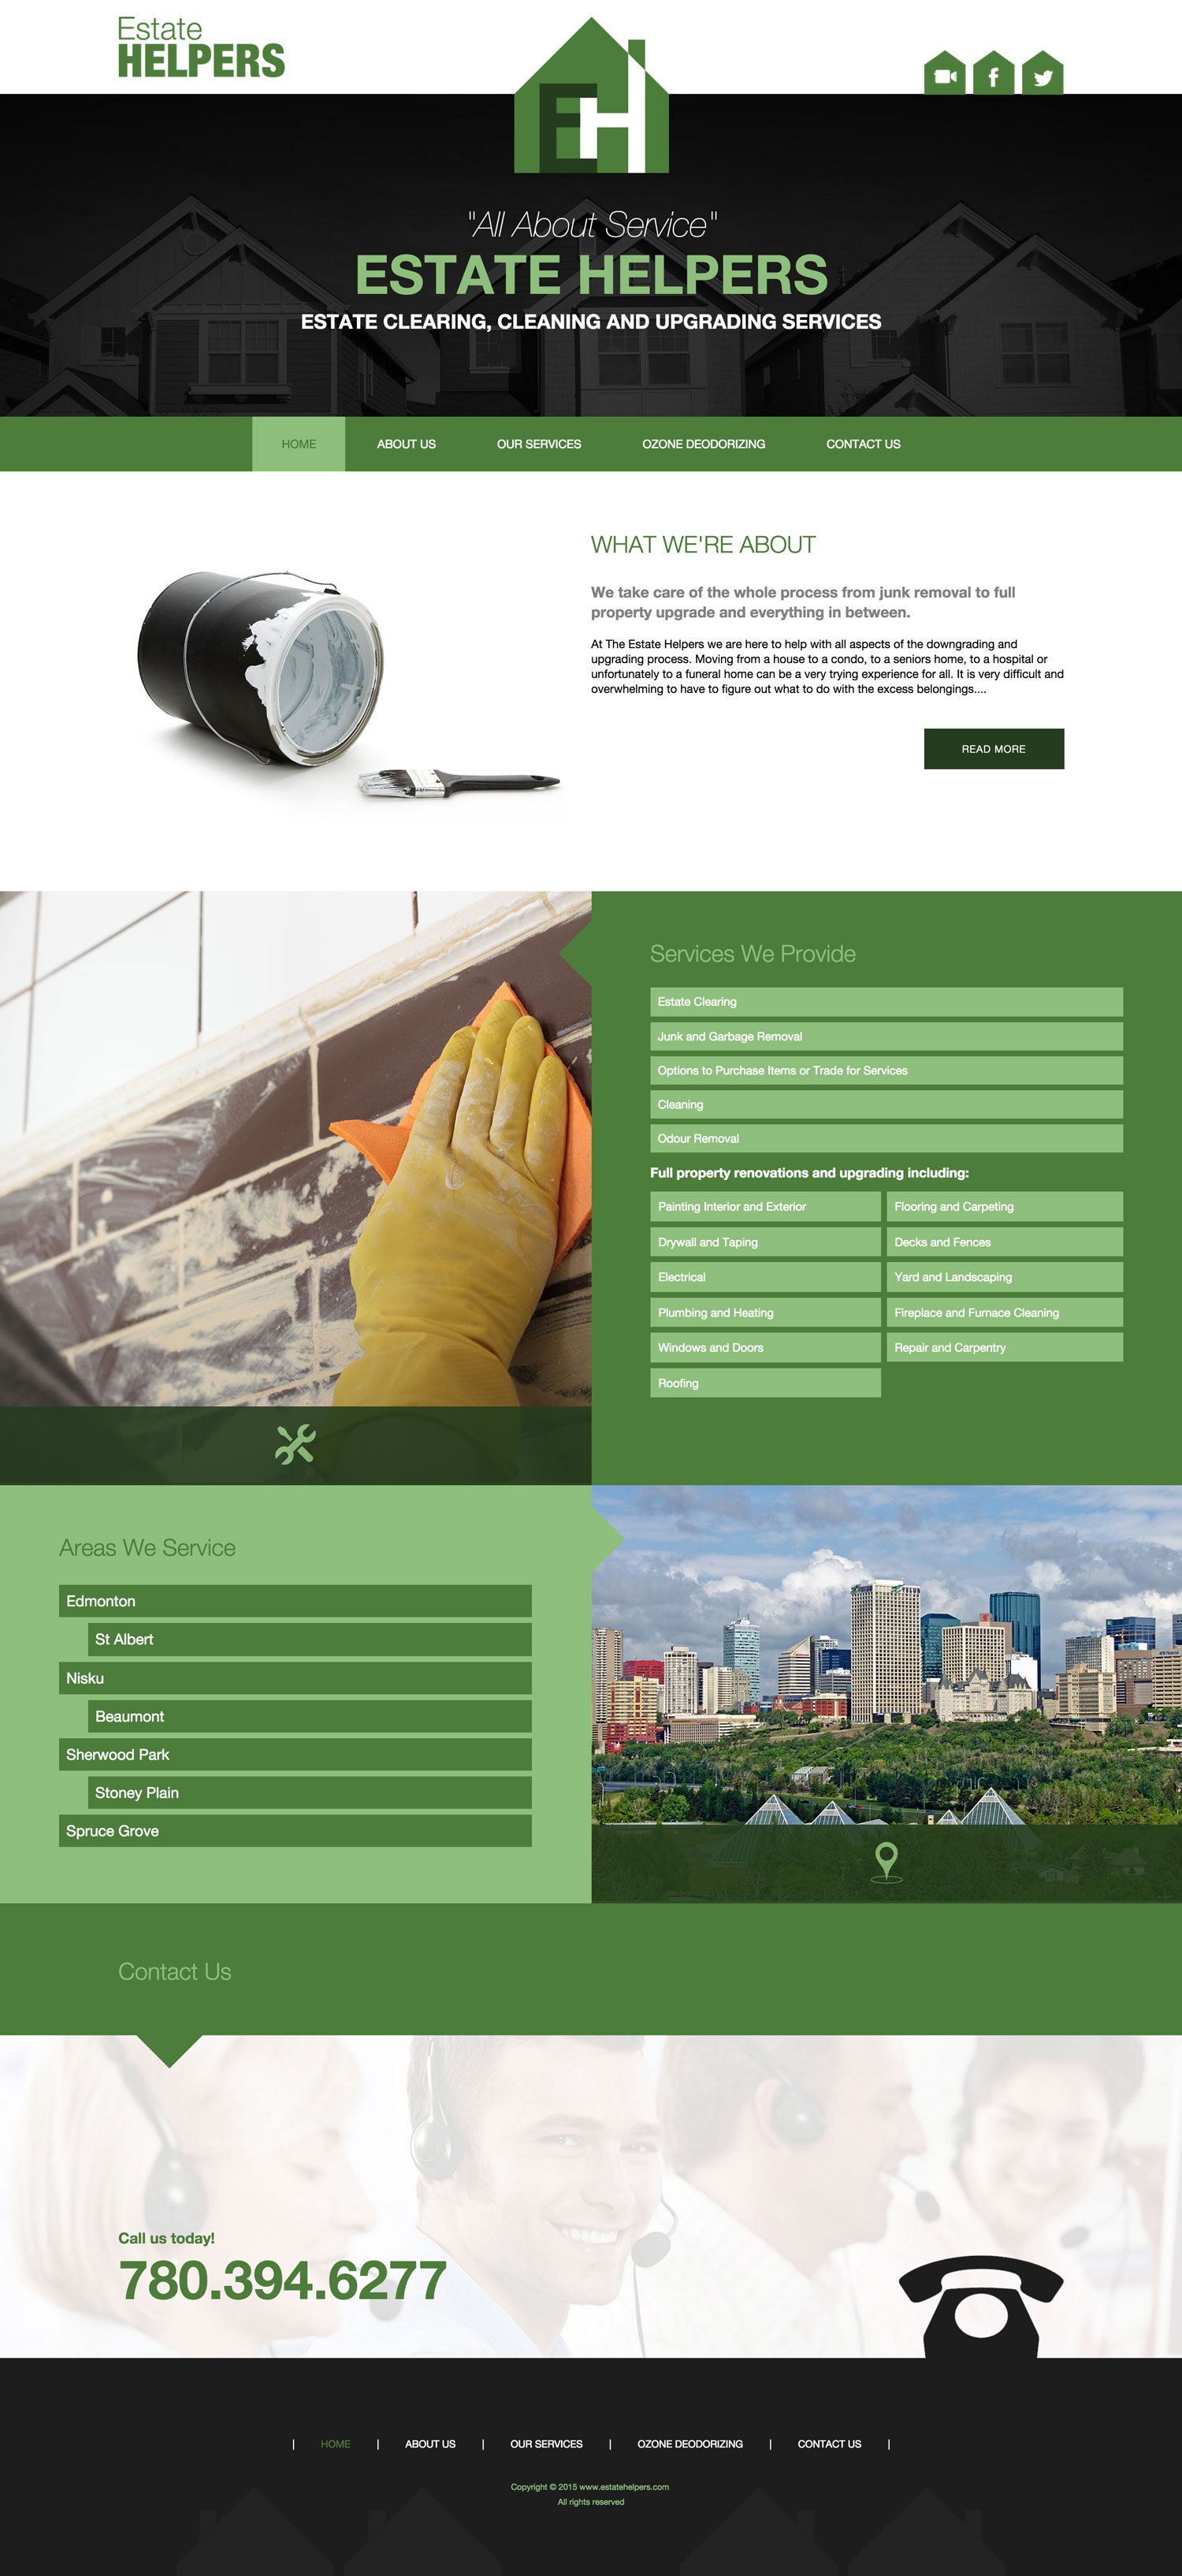 Edmonton Web Design - Jeff Penner